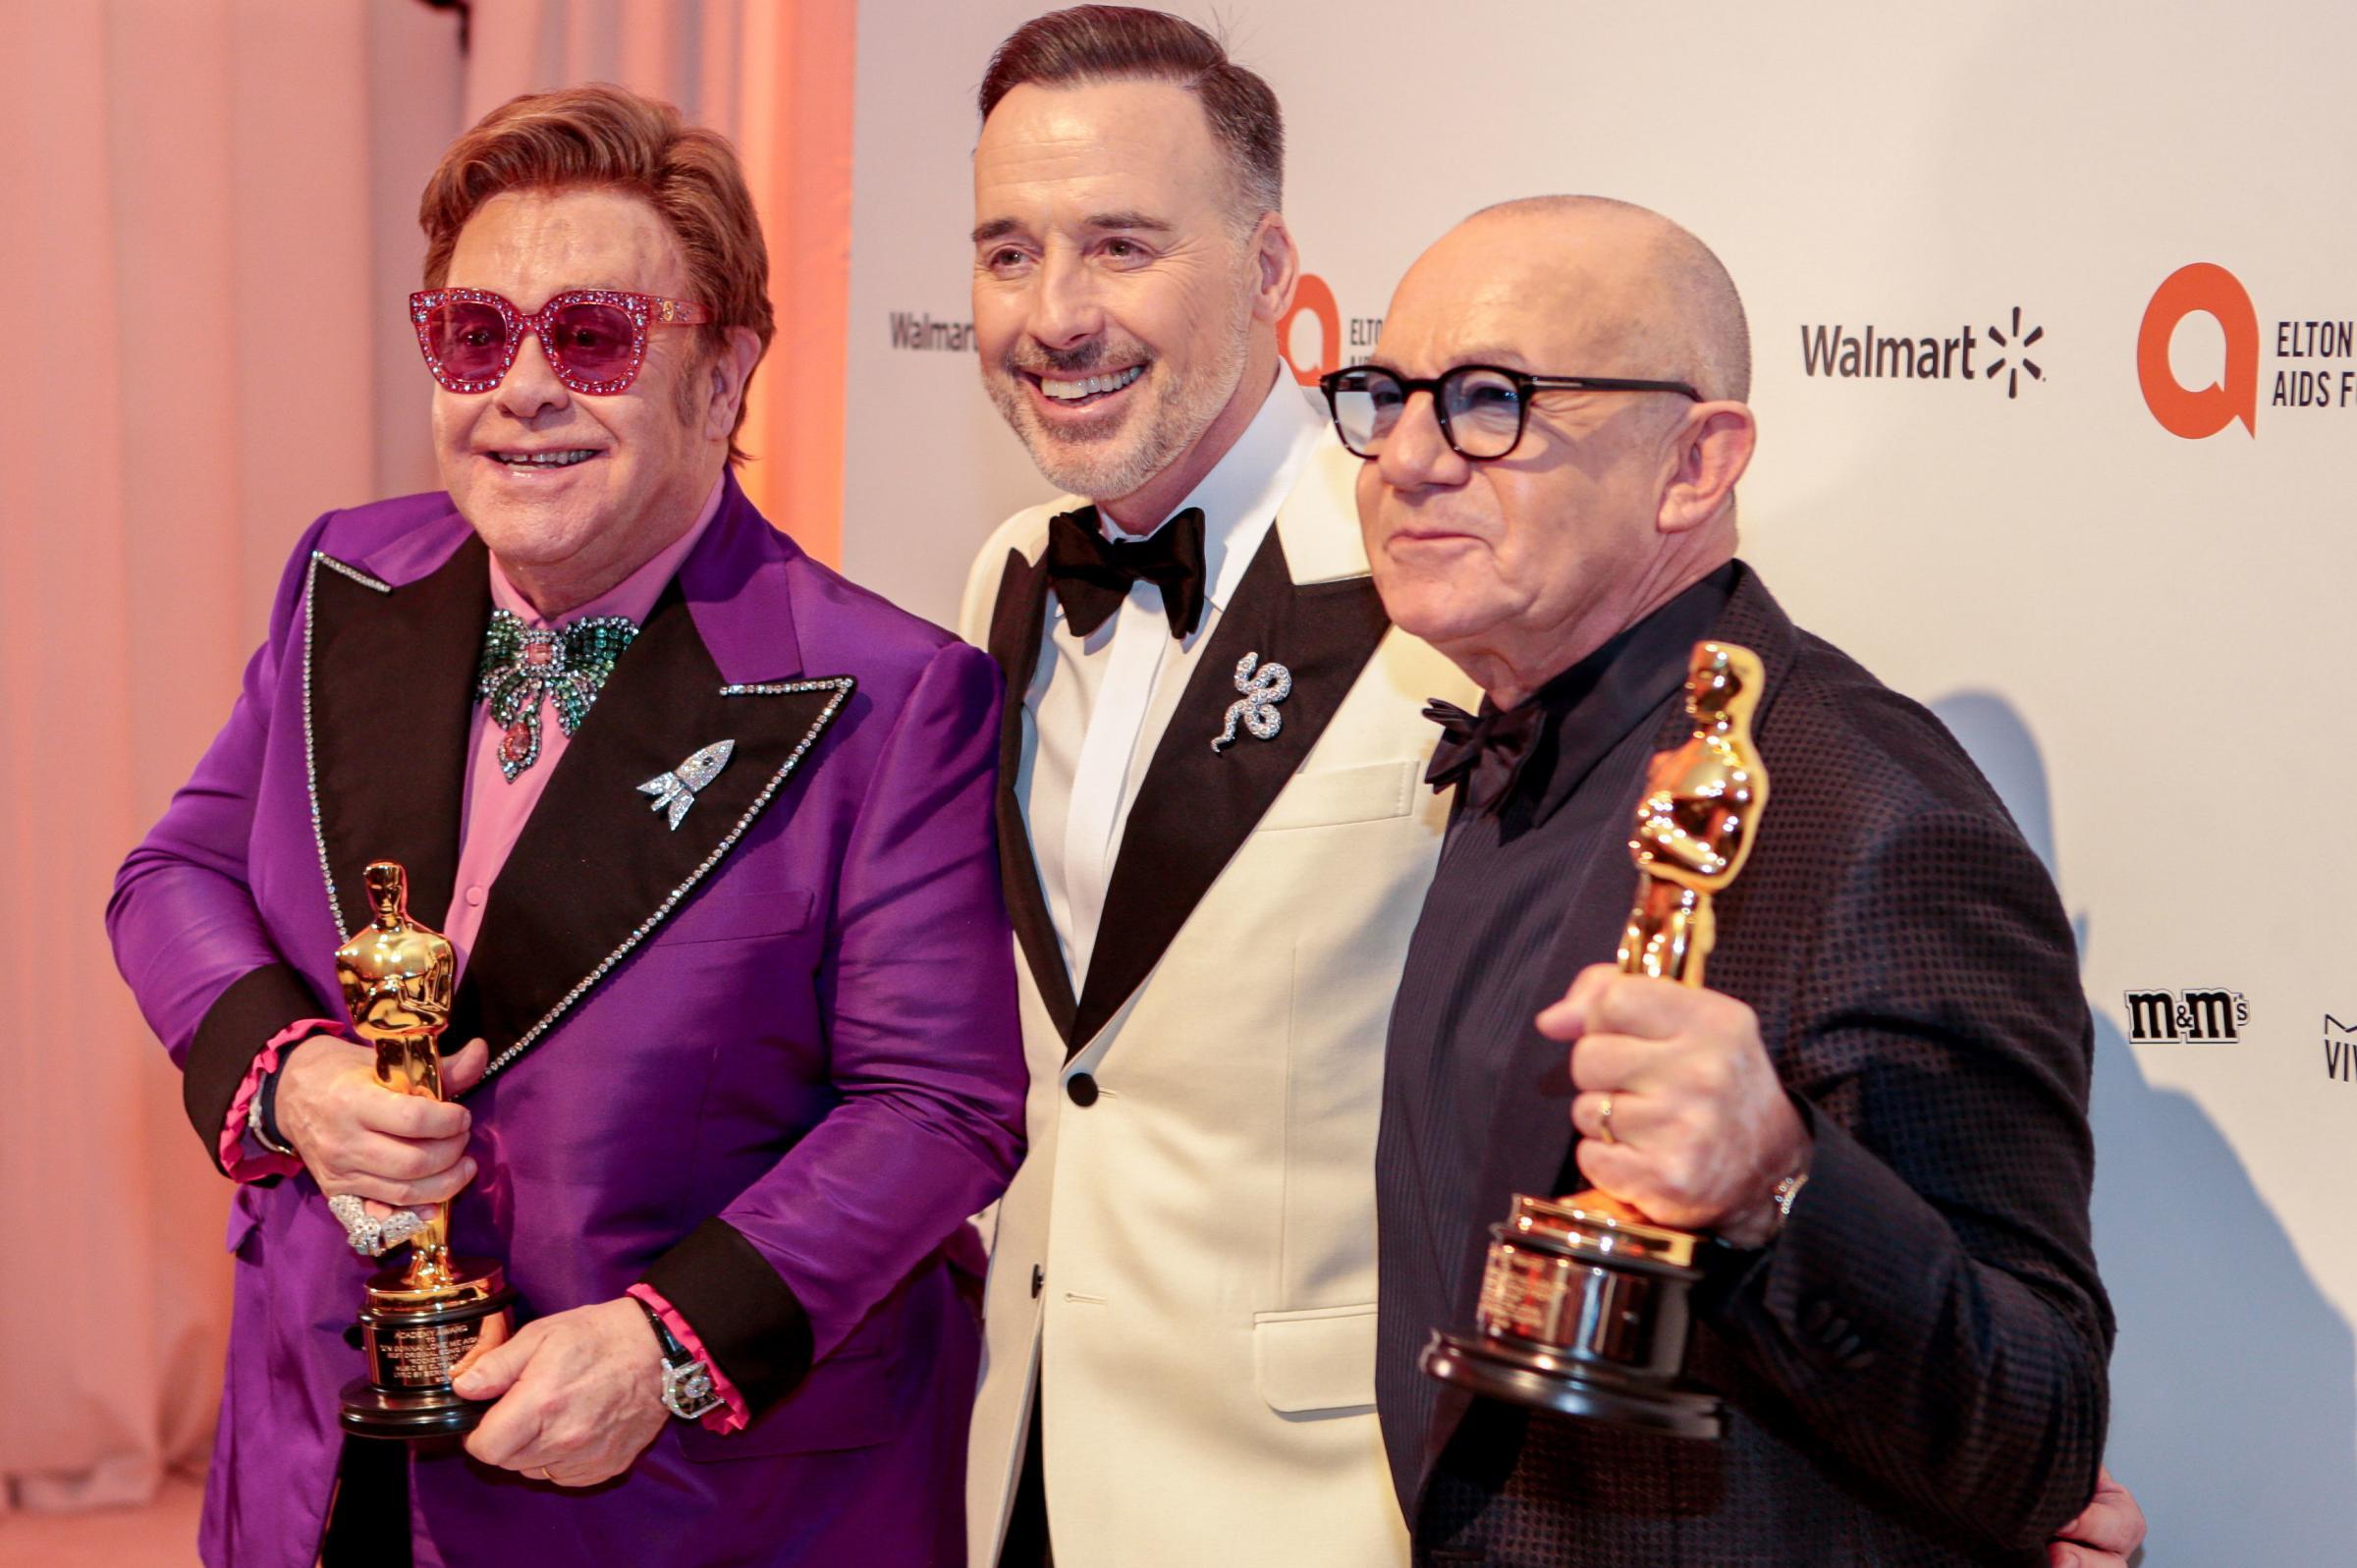 Elton John, David Furnish and Bernie Taupin celebrate the win (Photo: PA Wire)